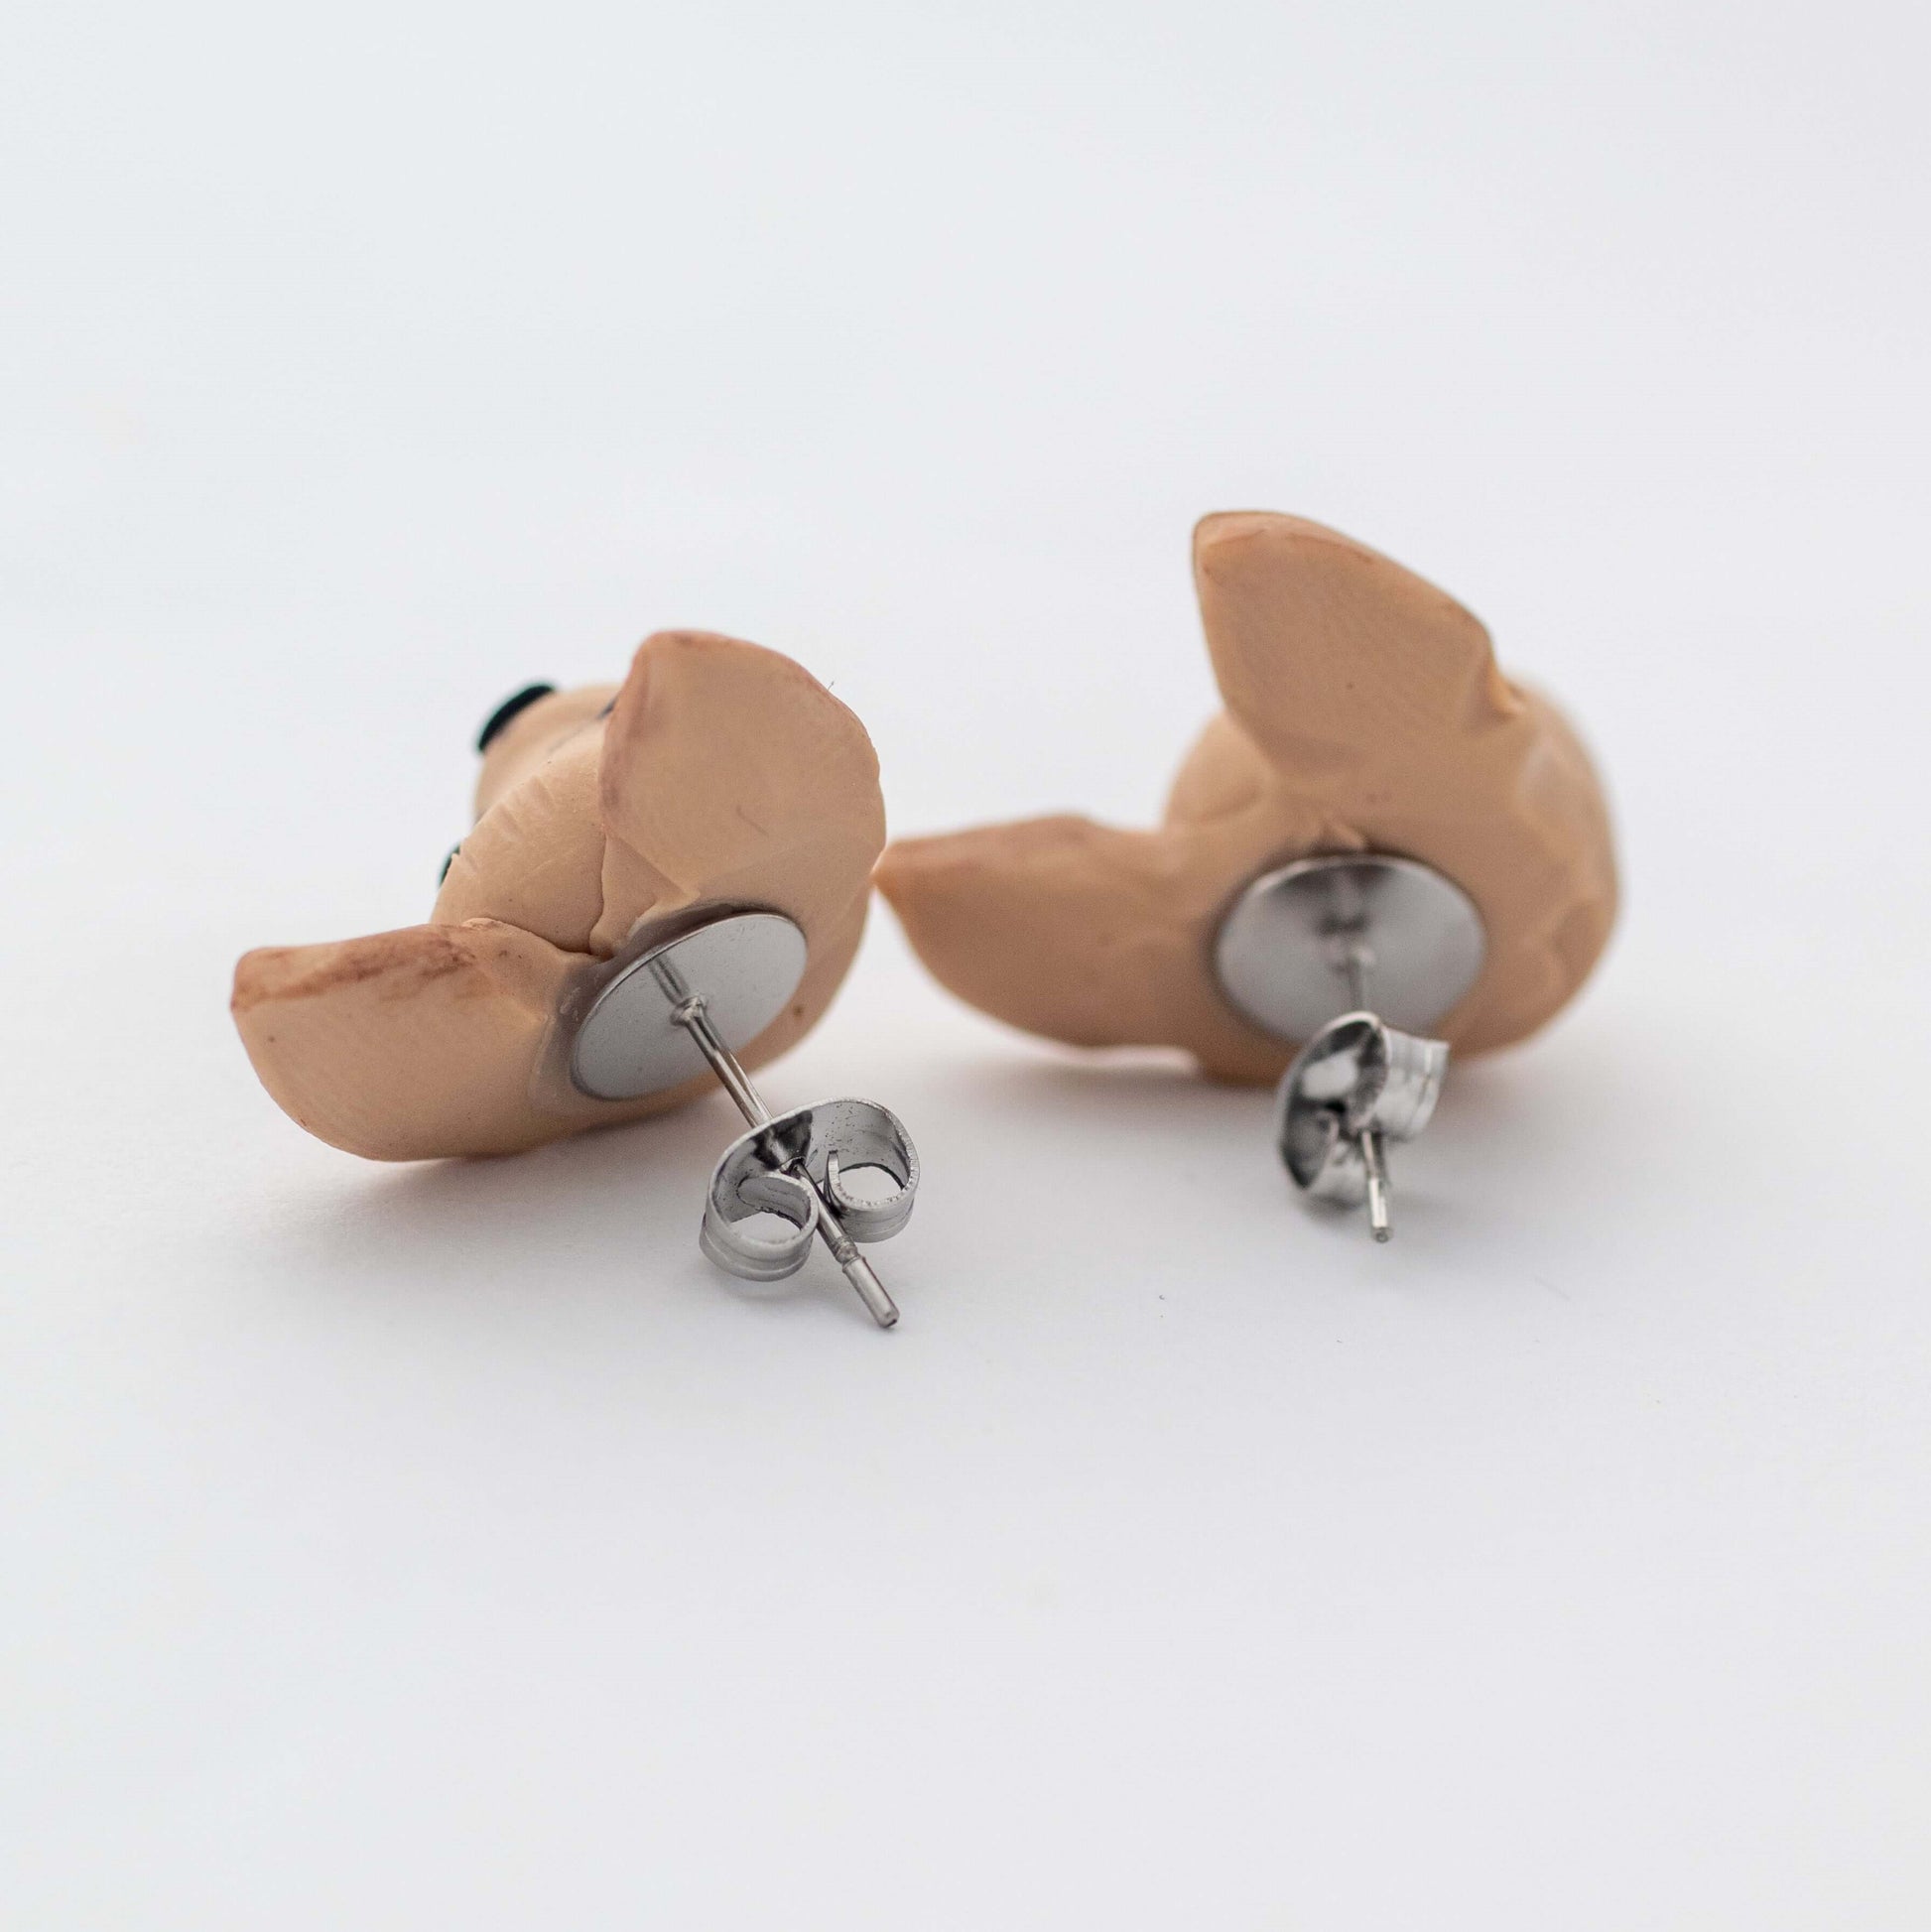 Handmade polymer clay chihuahua stud earrings showing surgical steel backs